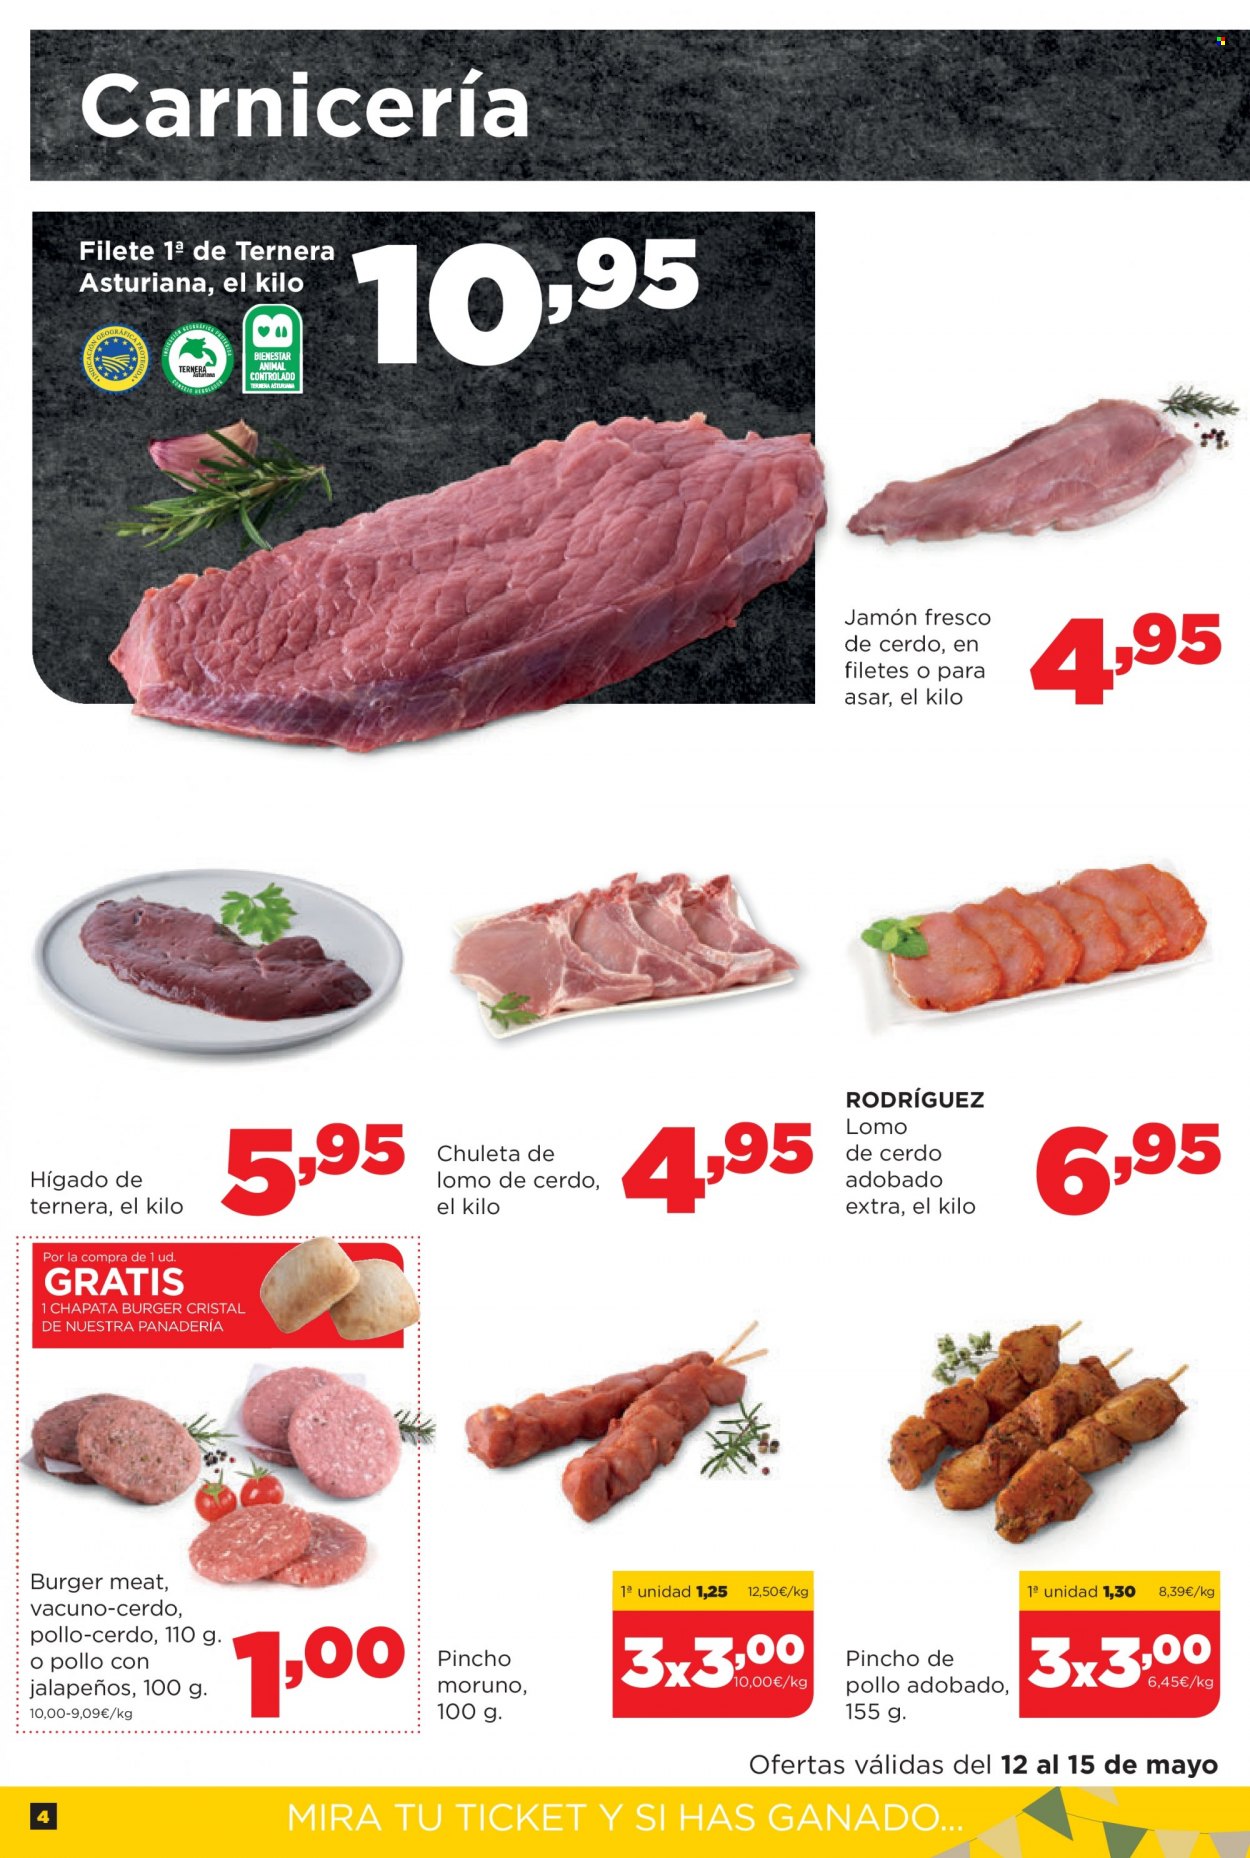 thumbnail - Folleto actual Alimerka - 12/05/22 - 25/05/22 - Ventas - chuleta, lomo, lomo de cerdo, carne de ternera, hamburguesa, carne picada, chapata, jamón. Página 4.